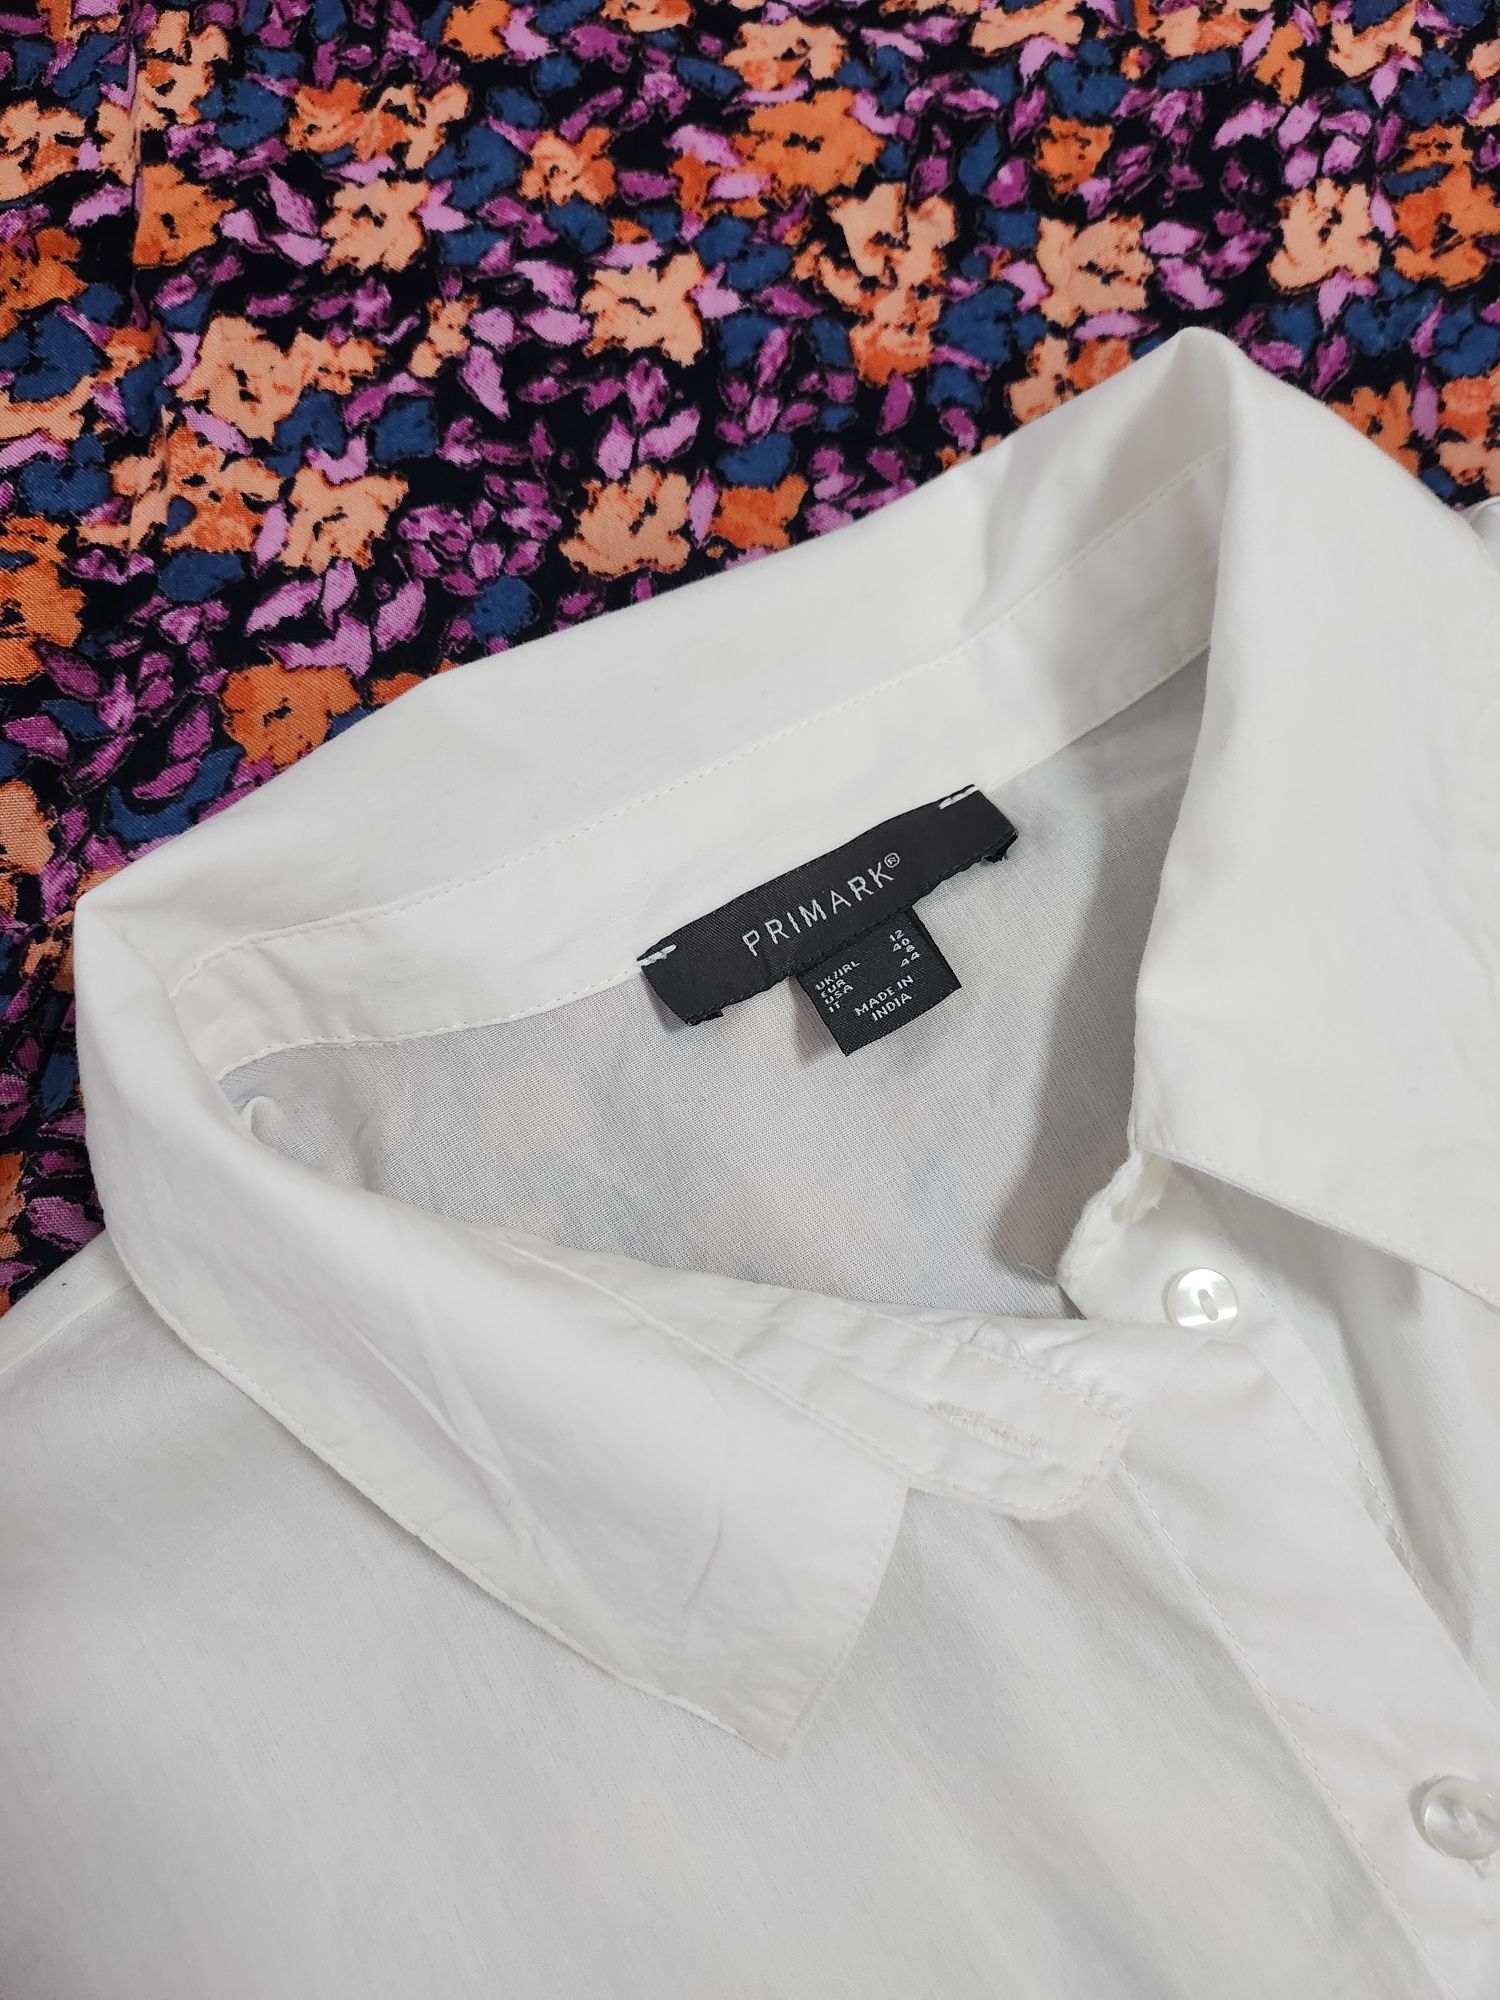 Белая короткая рубашка кроппед Primark коттон